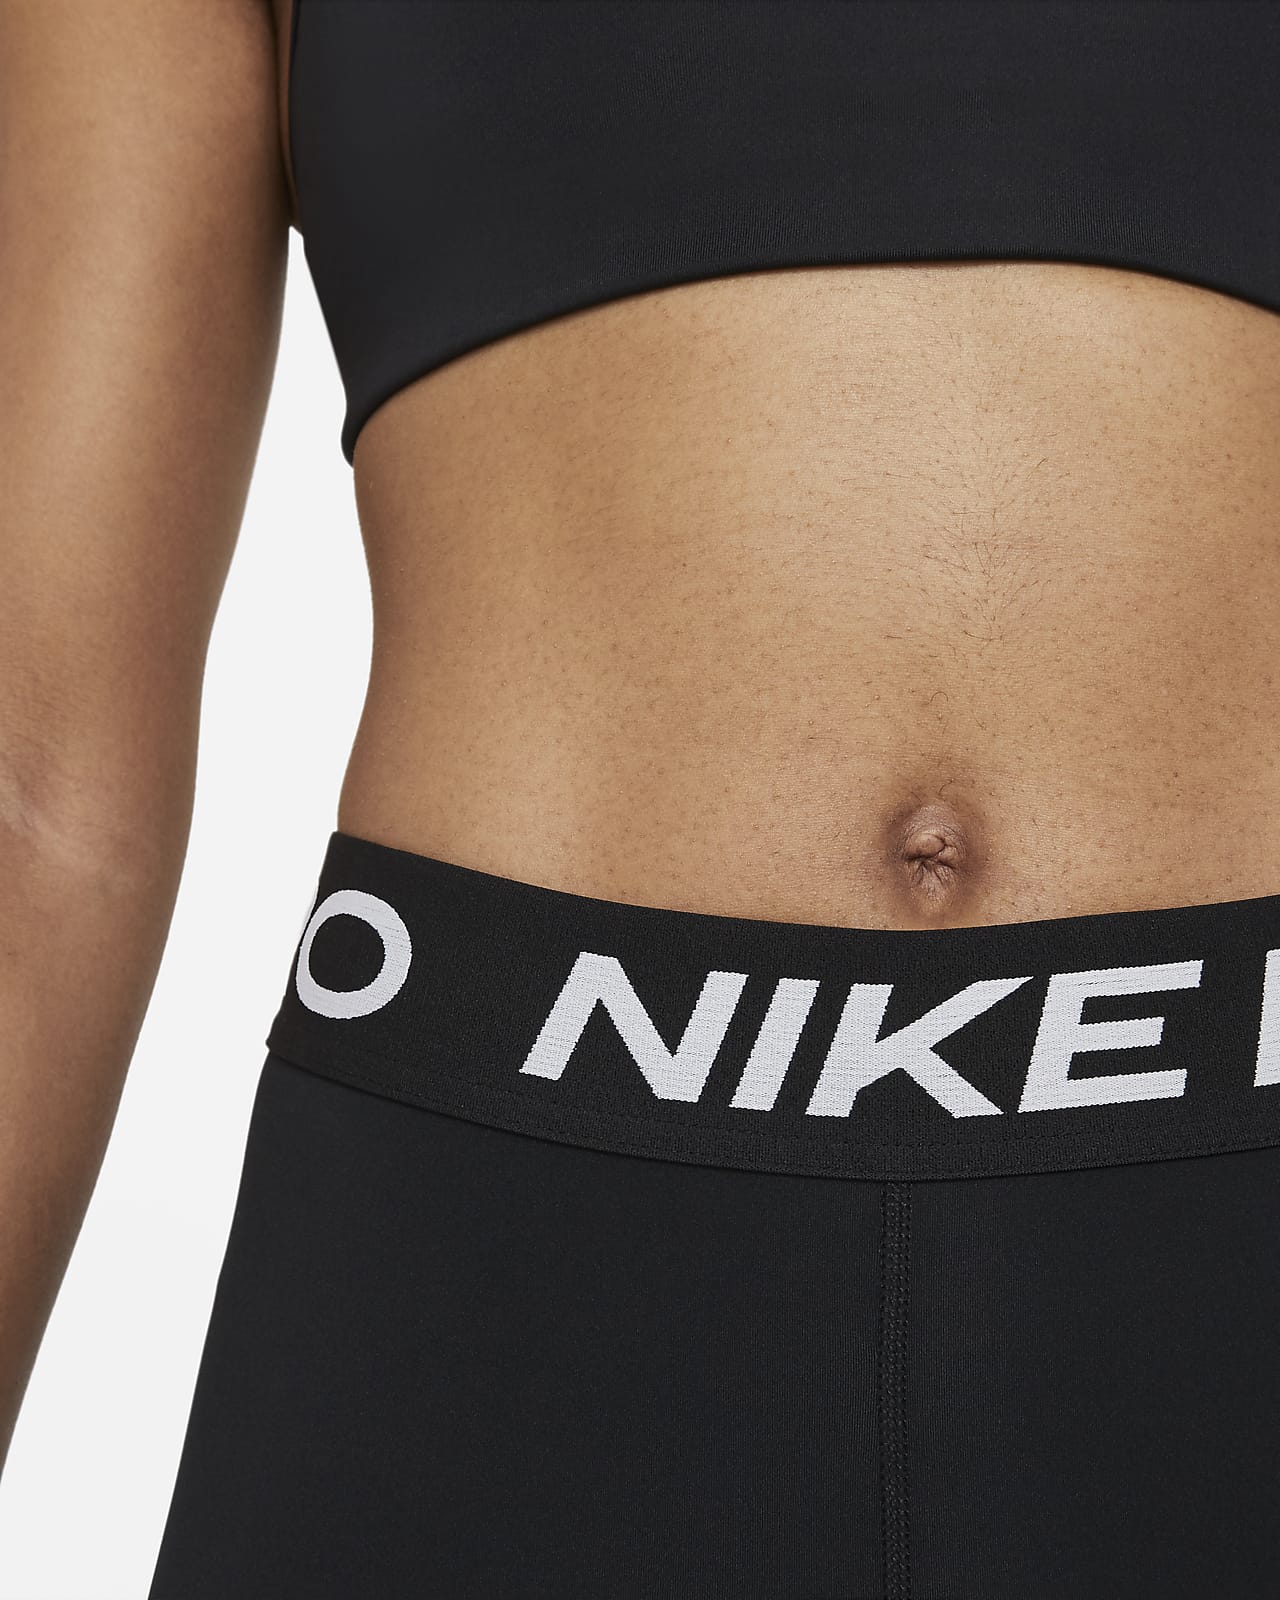 Nike Pro Training Plus 365 leggings in marl grey